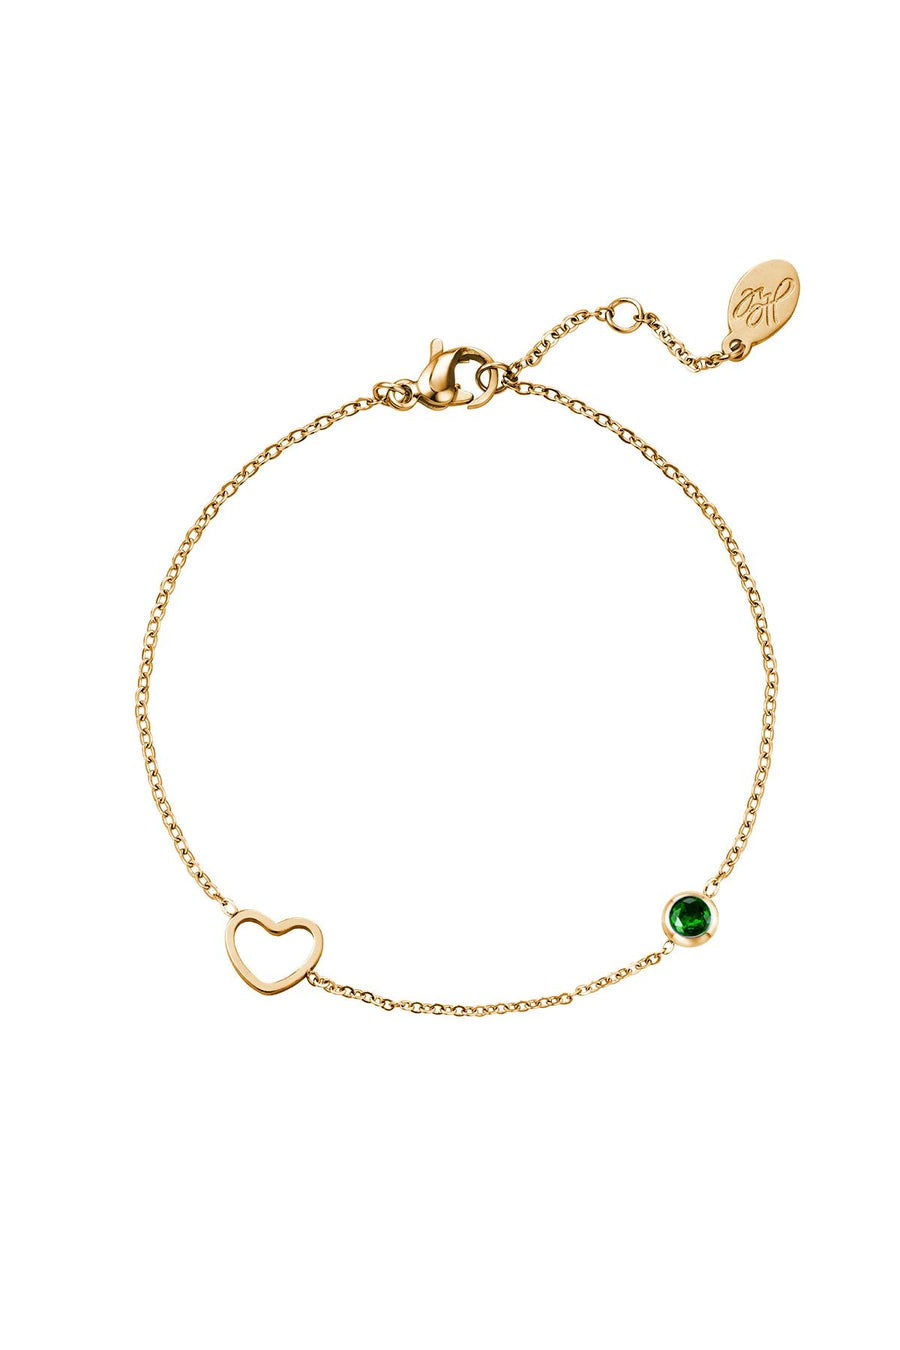 May/Emerald Birthstone Bracelet